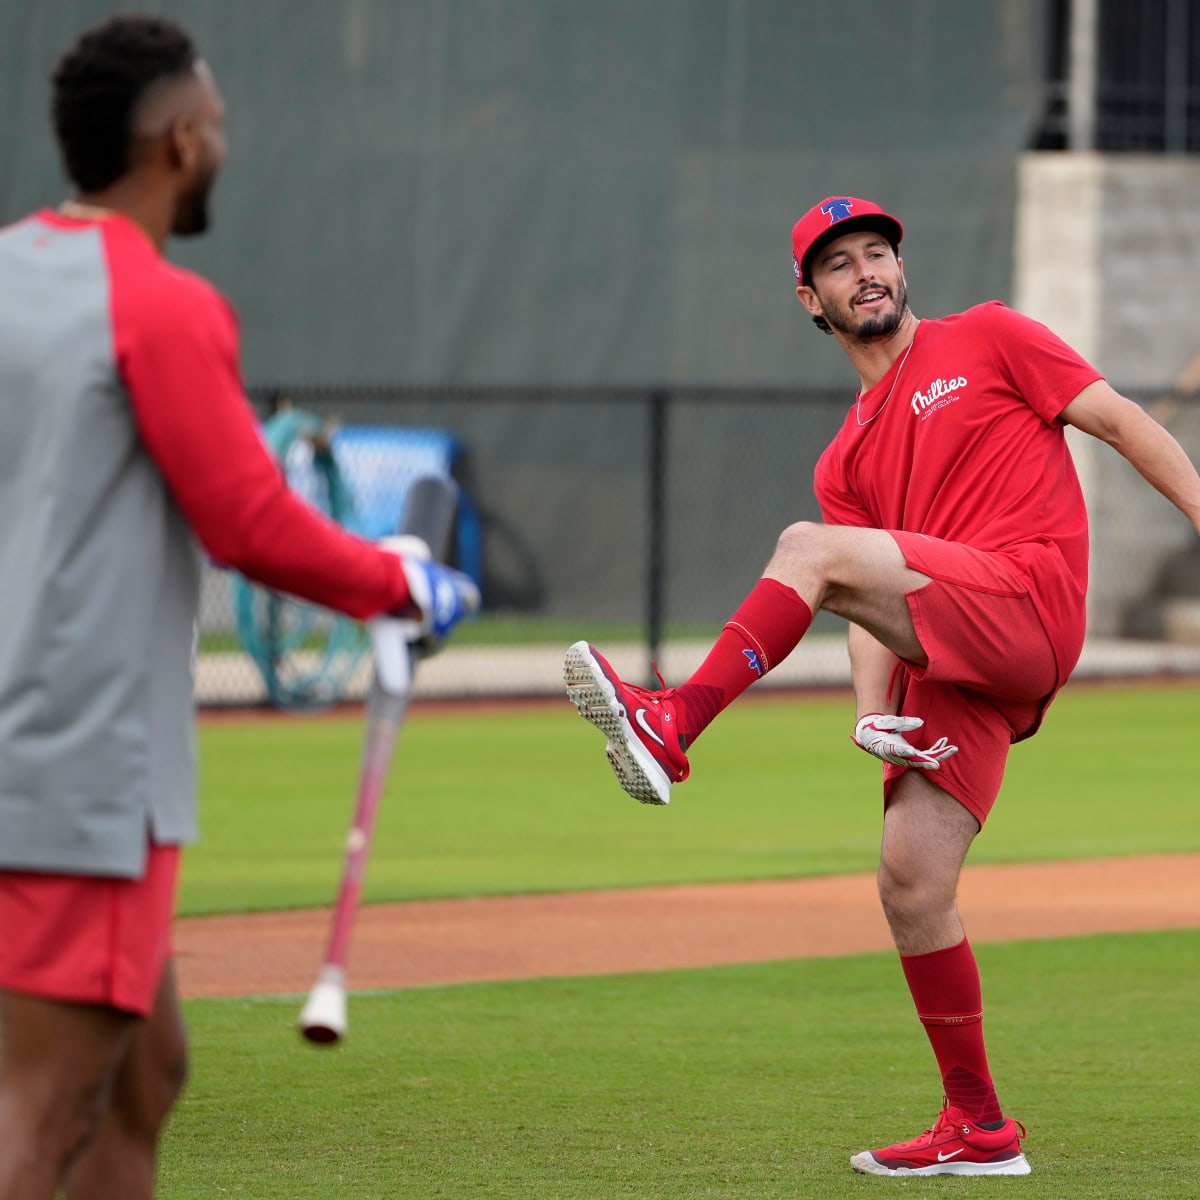 Phillies' Garrett Stubbs, Astros' CJ Stubbs Set For Battle of Brothers at  Spring Training - Fastball